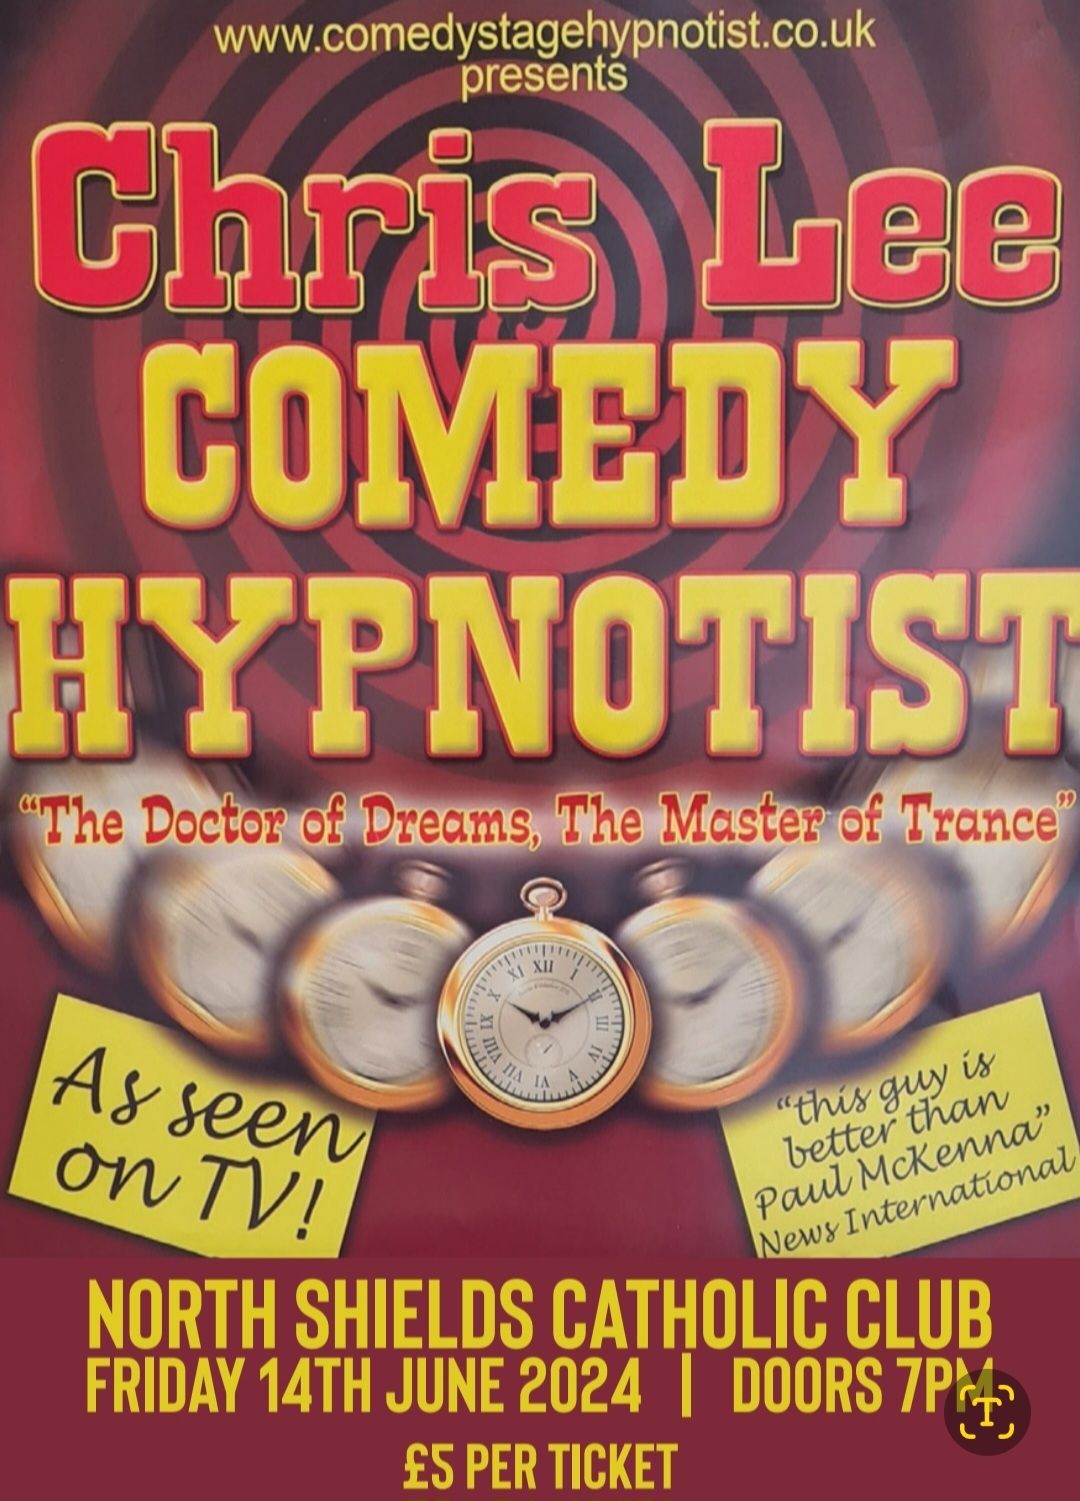 Chris Lee Comedy Hypnotist